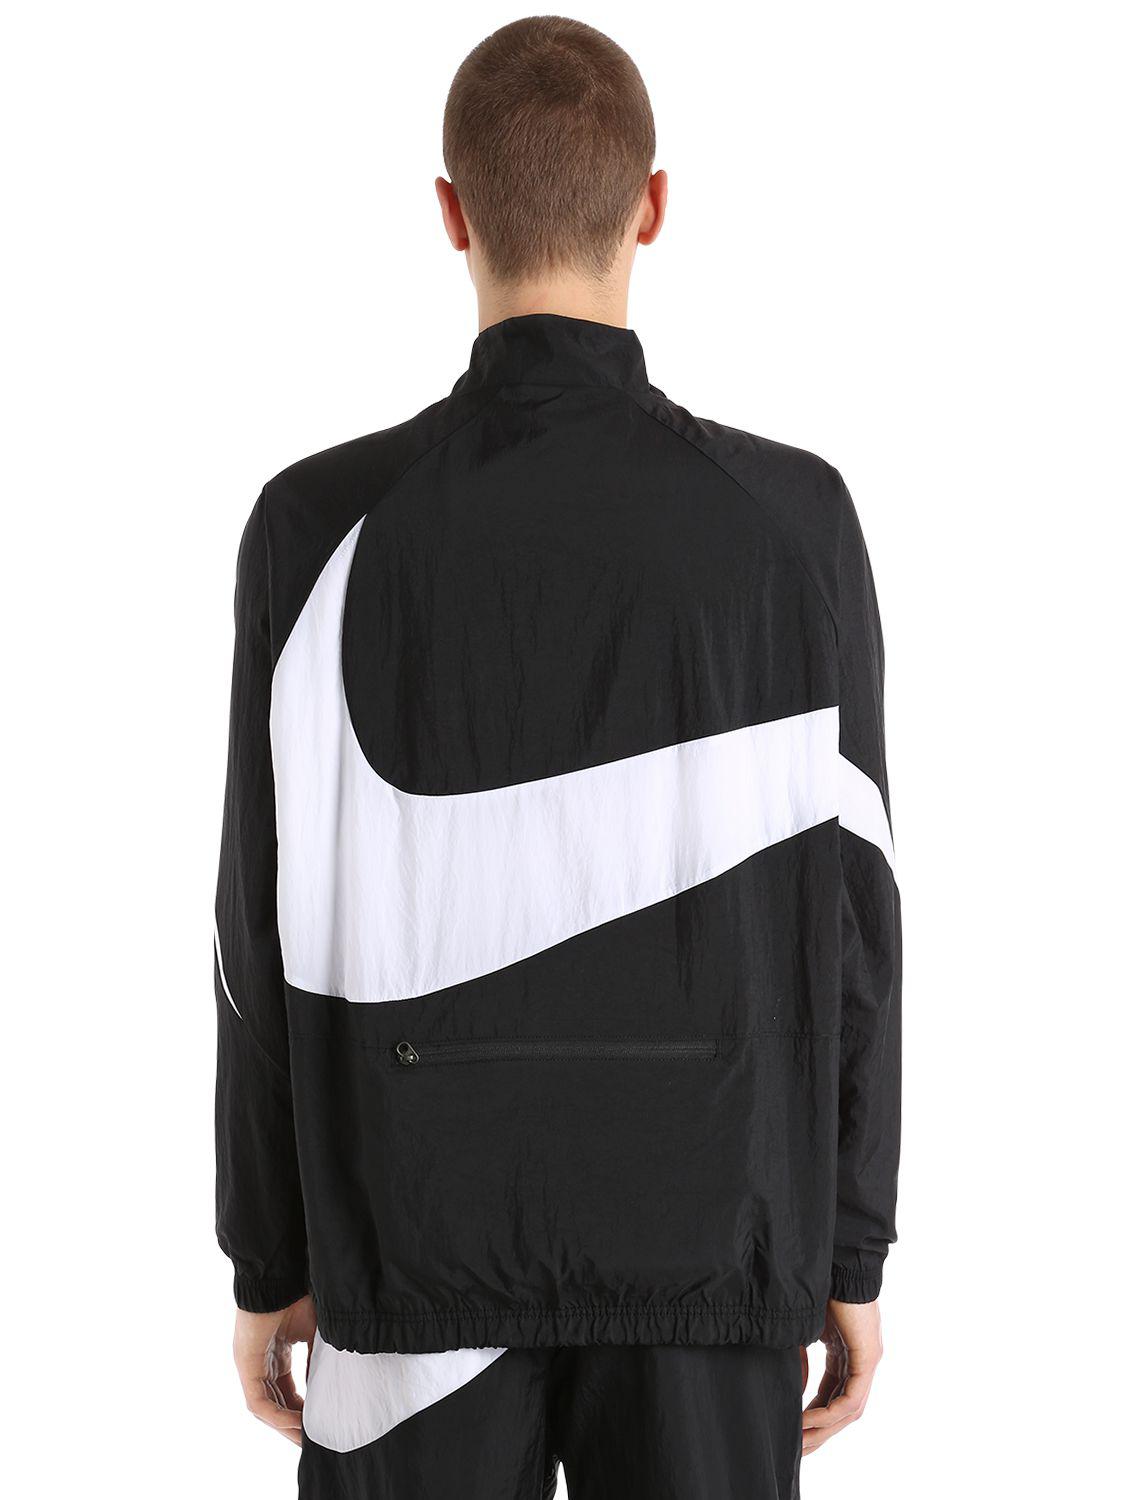 Nike Vaporwave Swoosh Woven Track Jacket in Black for Men | Lyst